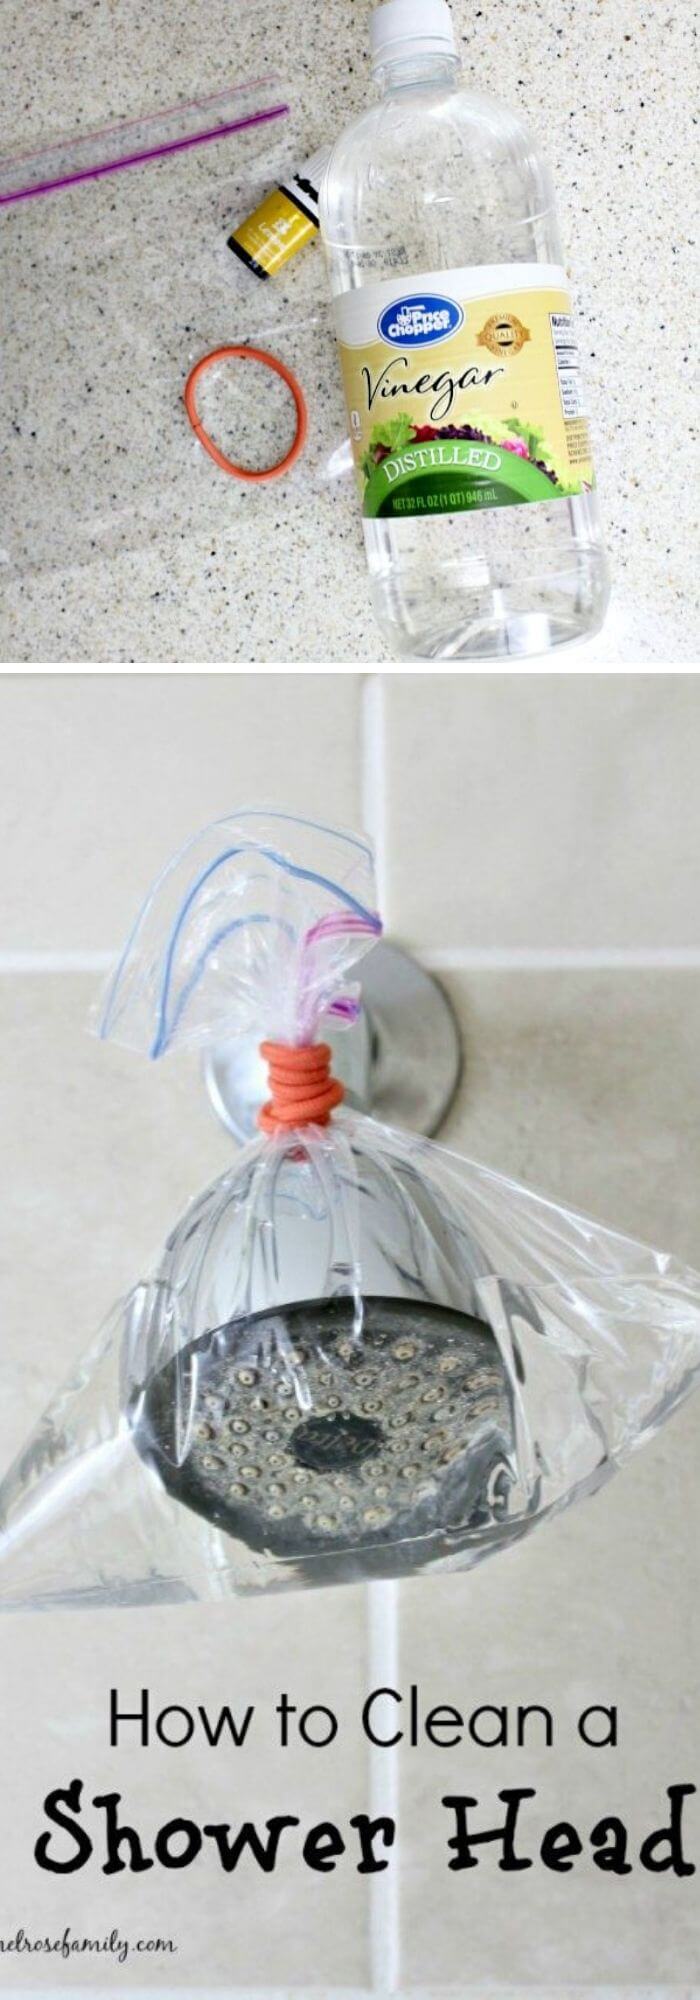 Use sandwich bag and distilled white vinegar to clean shower head